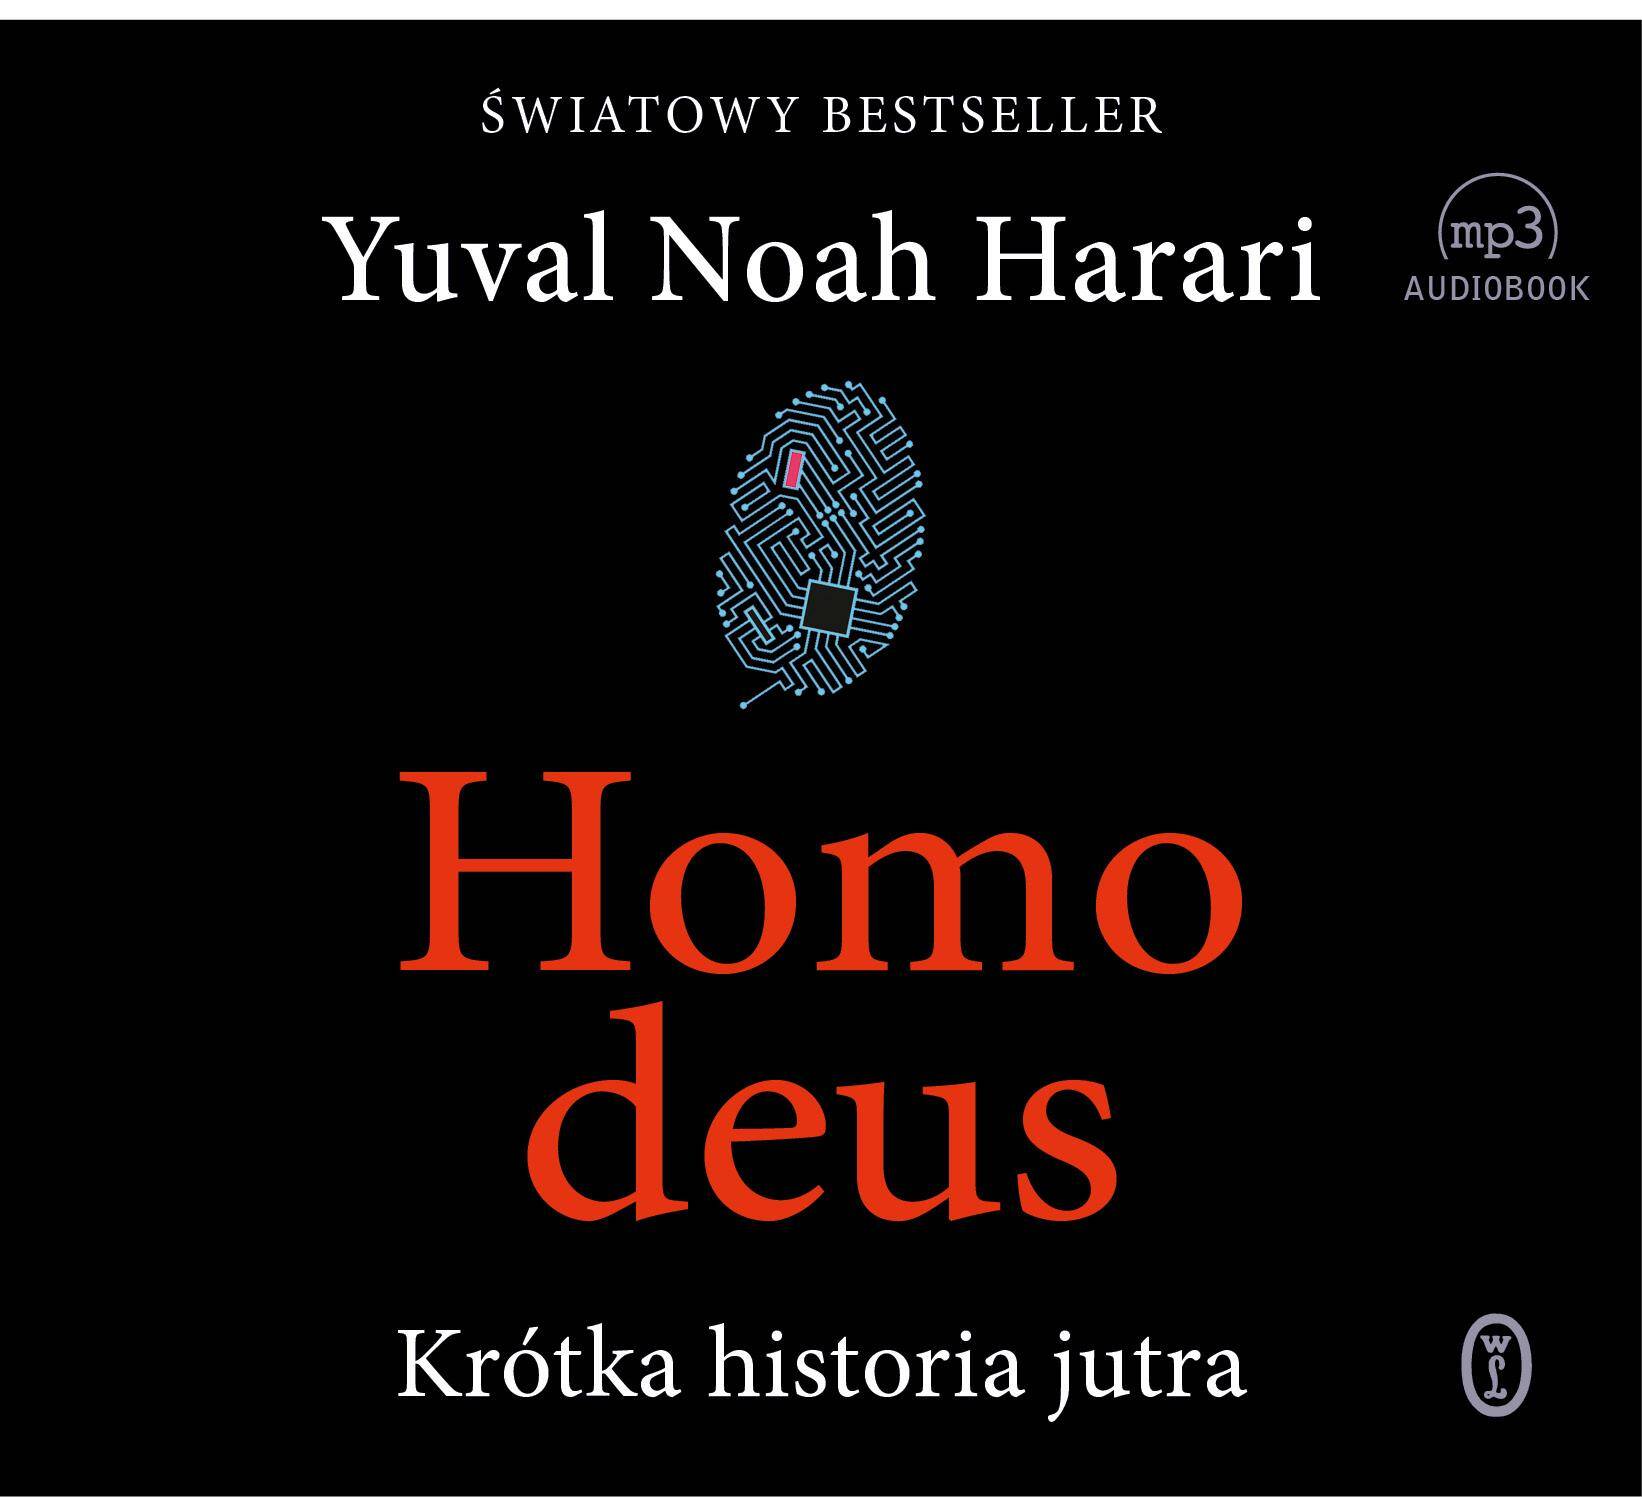 CD MP3 Homo deus krótka historia jutra